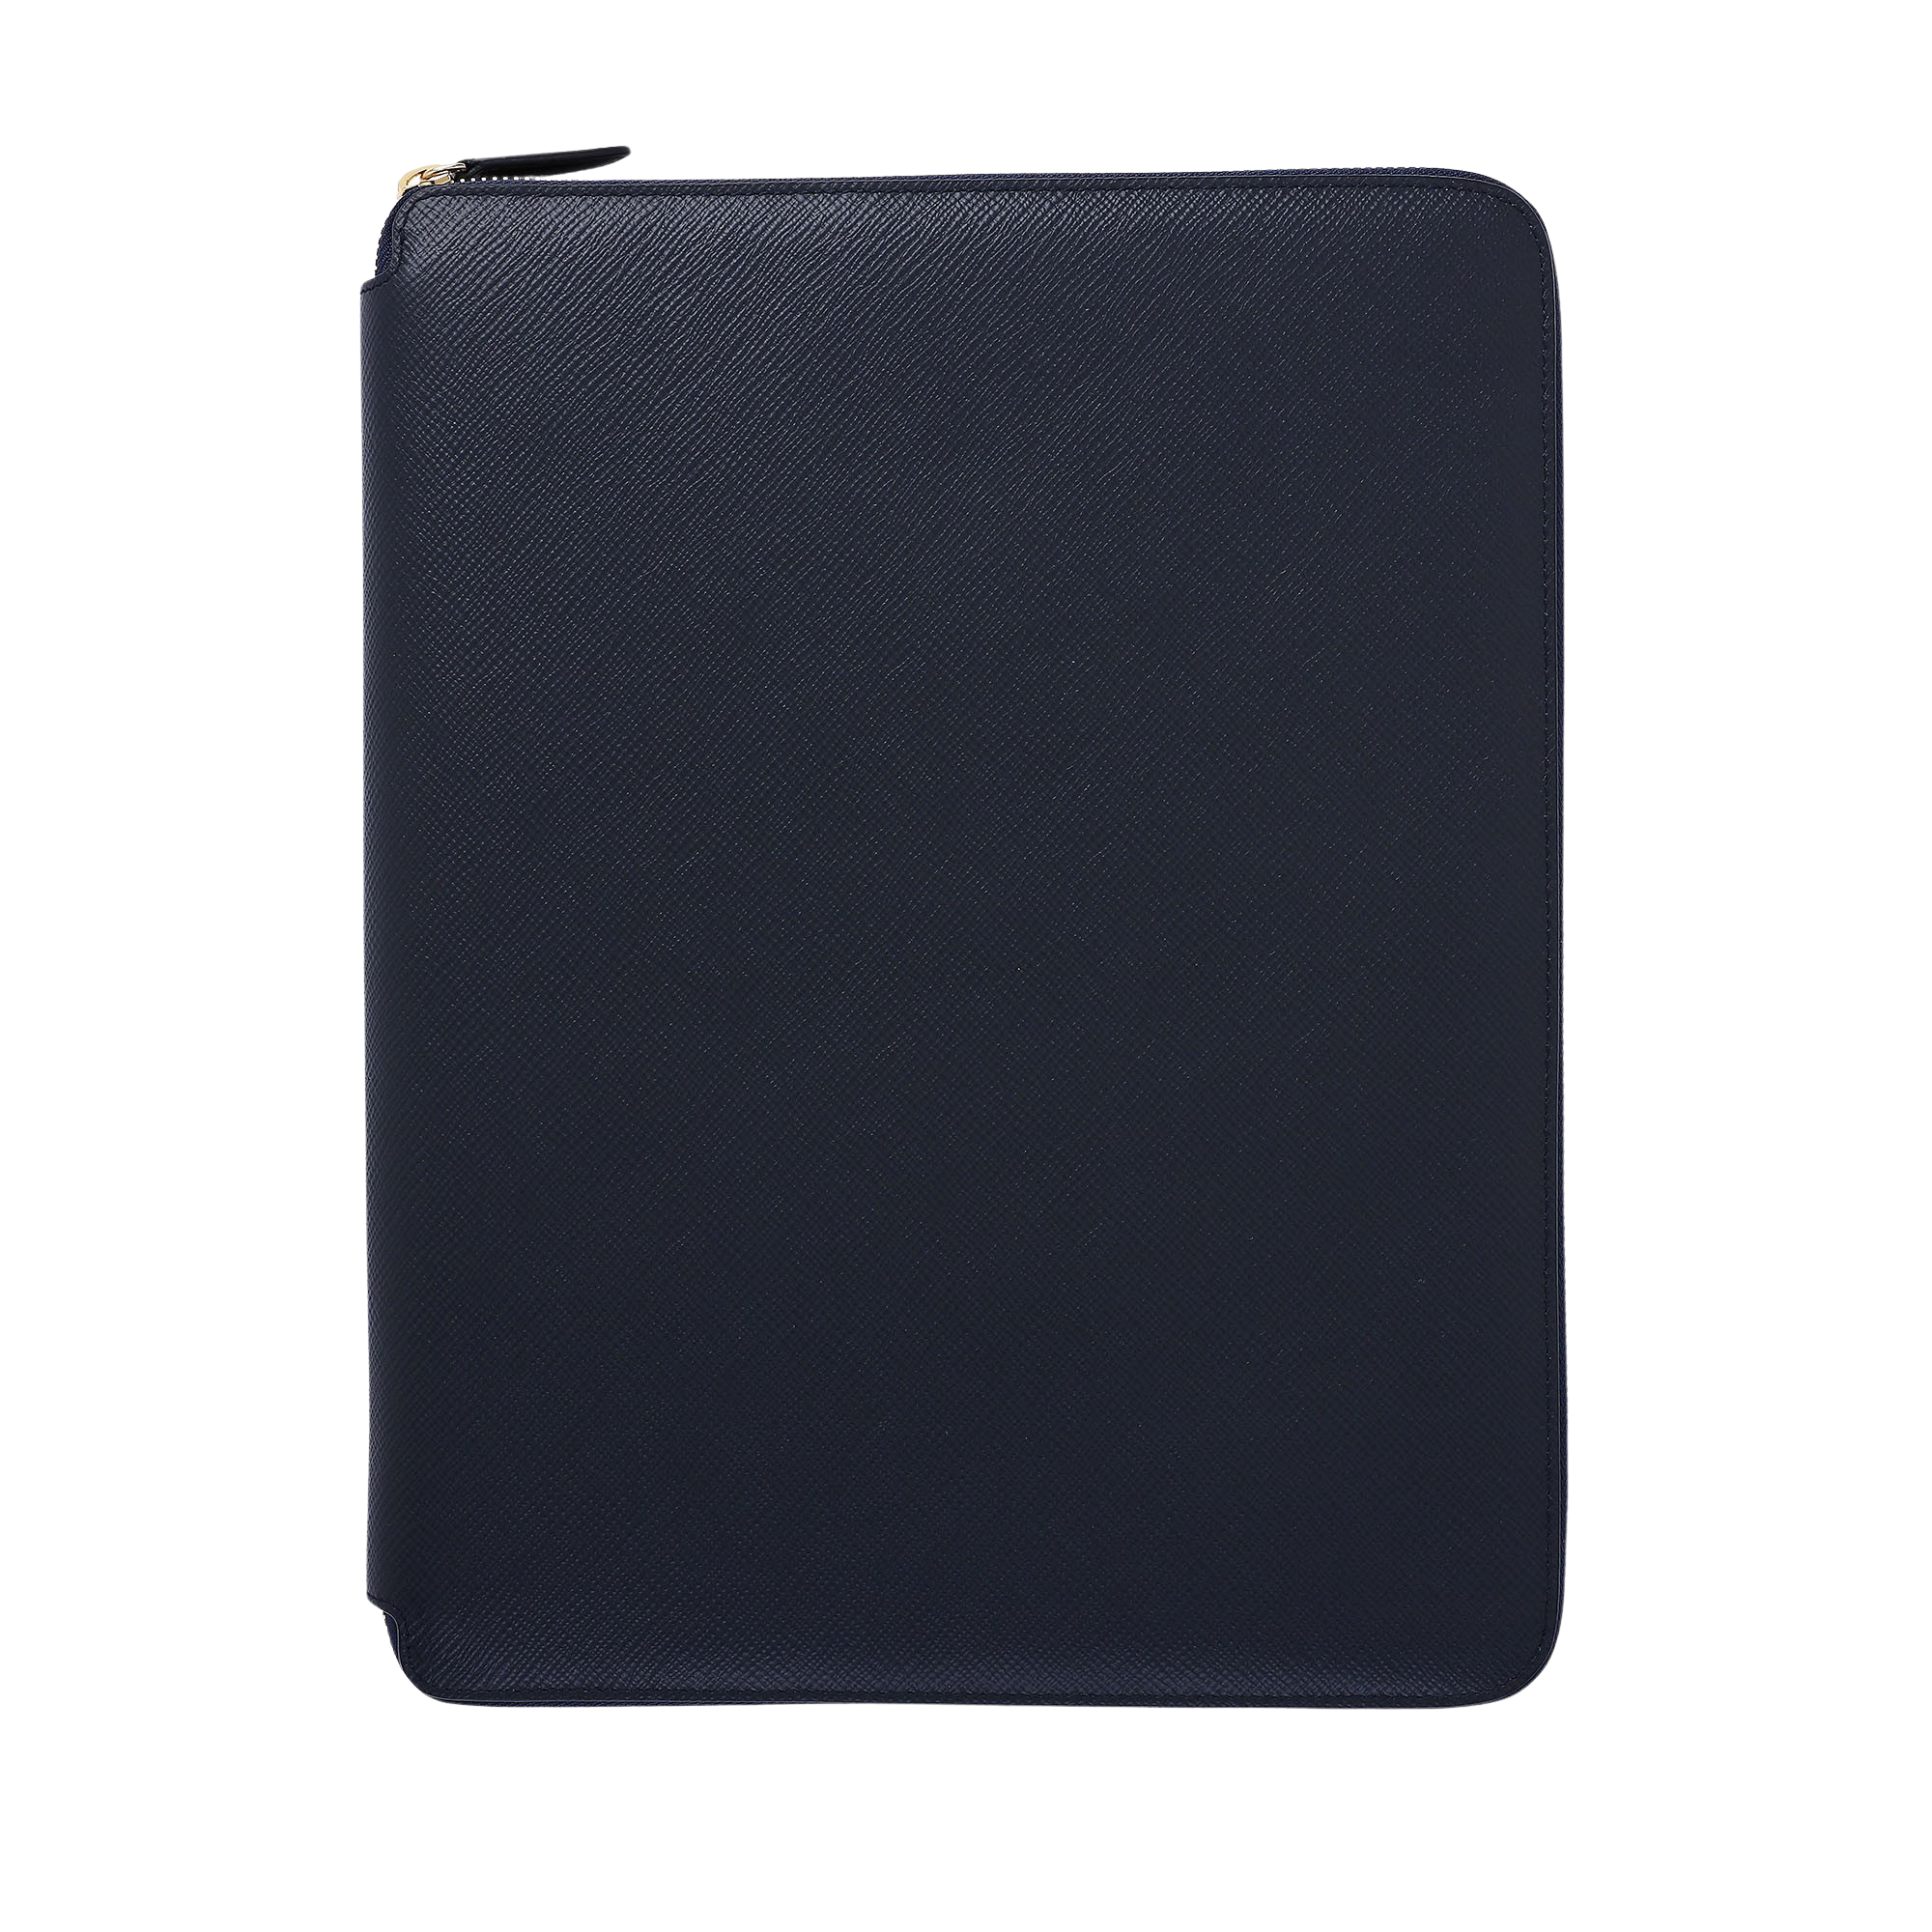 Smythson Navy Panama Leather A4 Zip Folder Feature